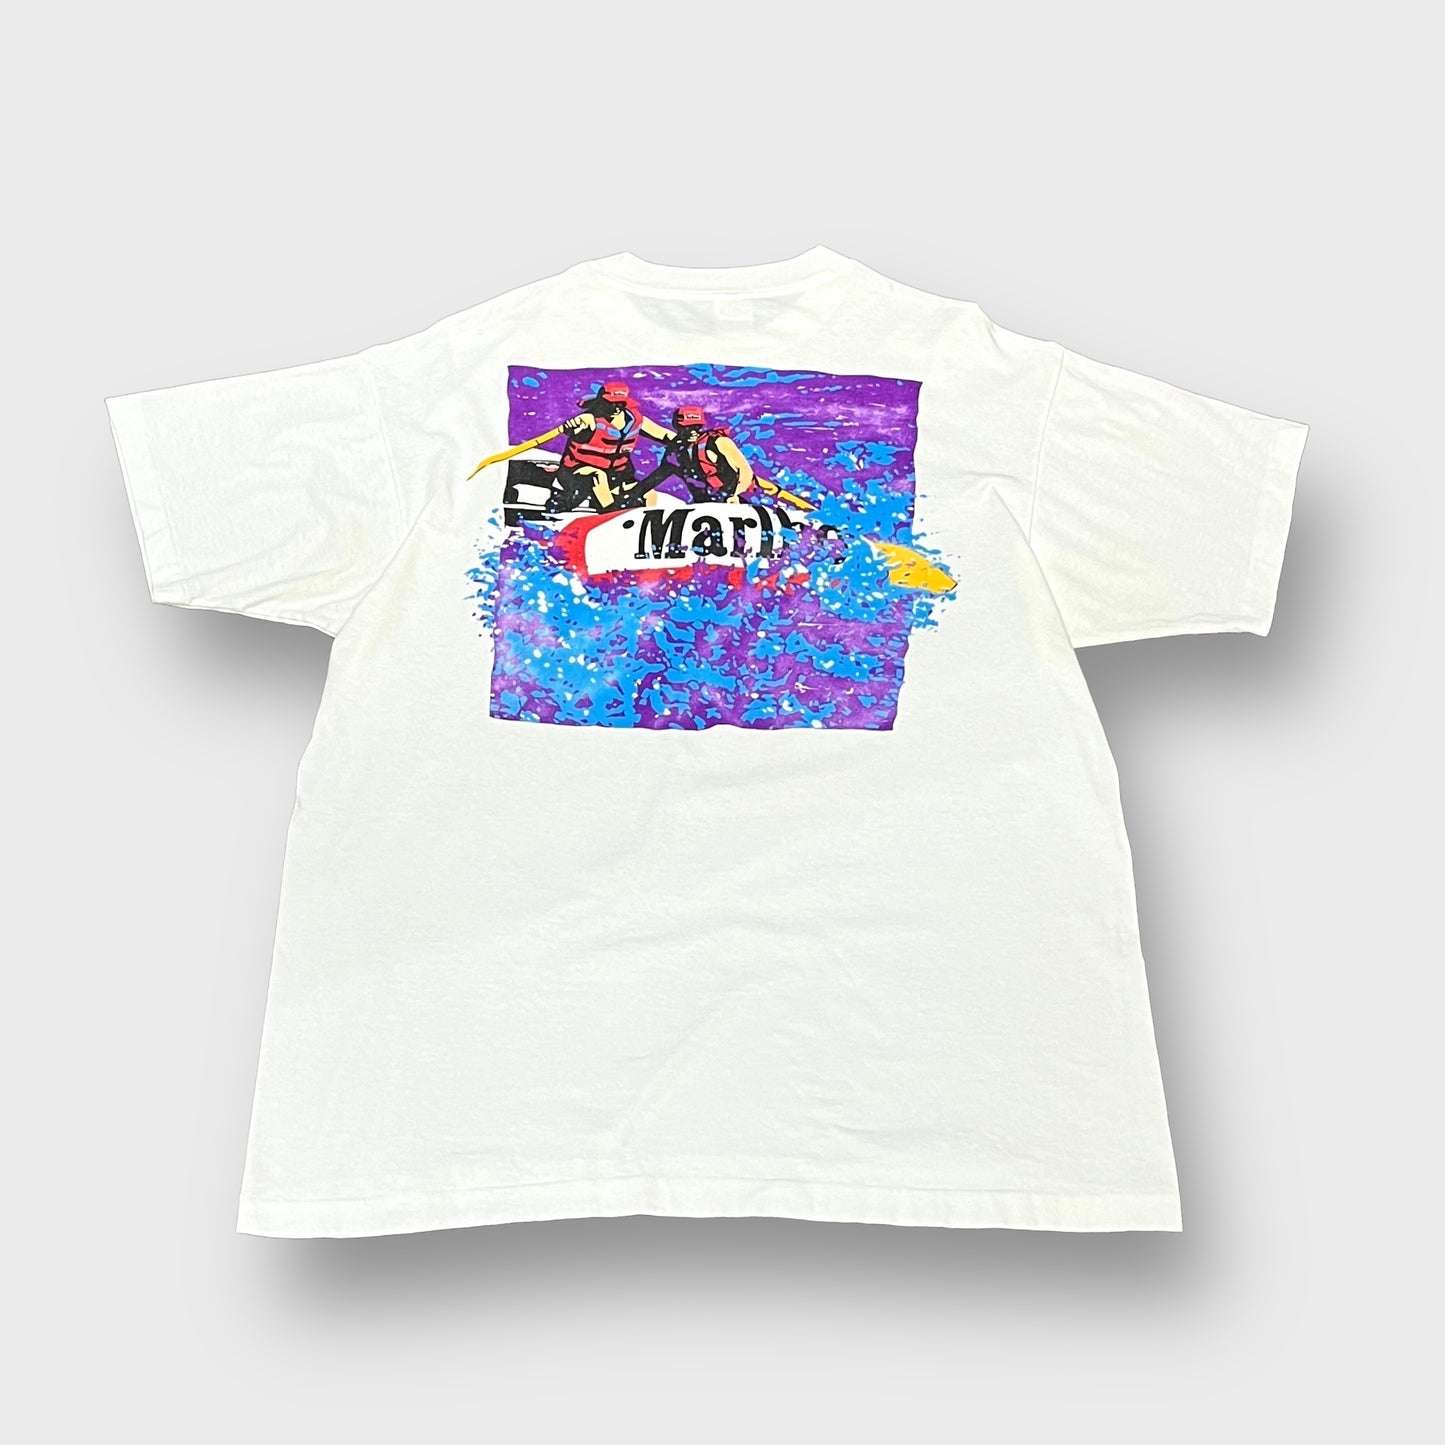 90’s “Marlboro”
adventure team t-shirt